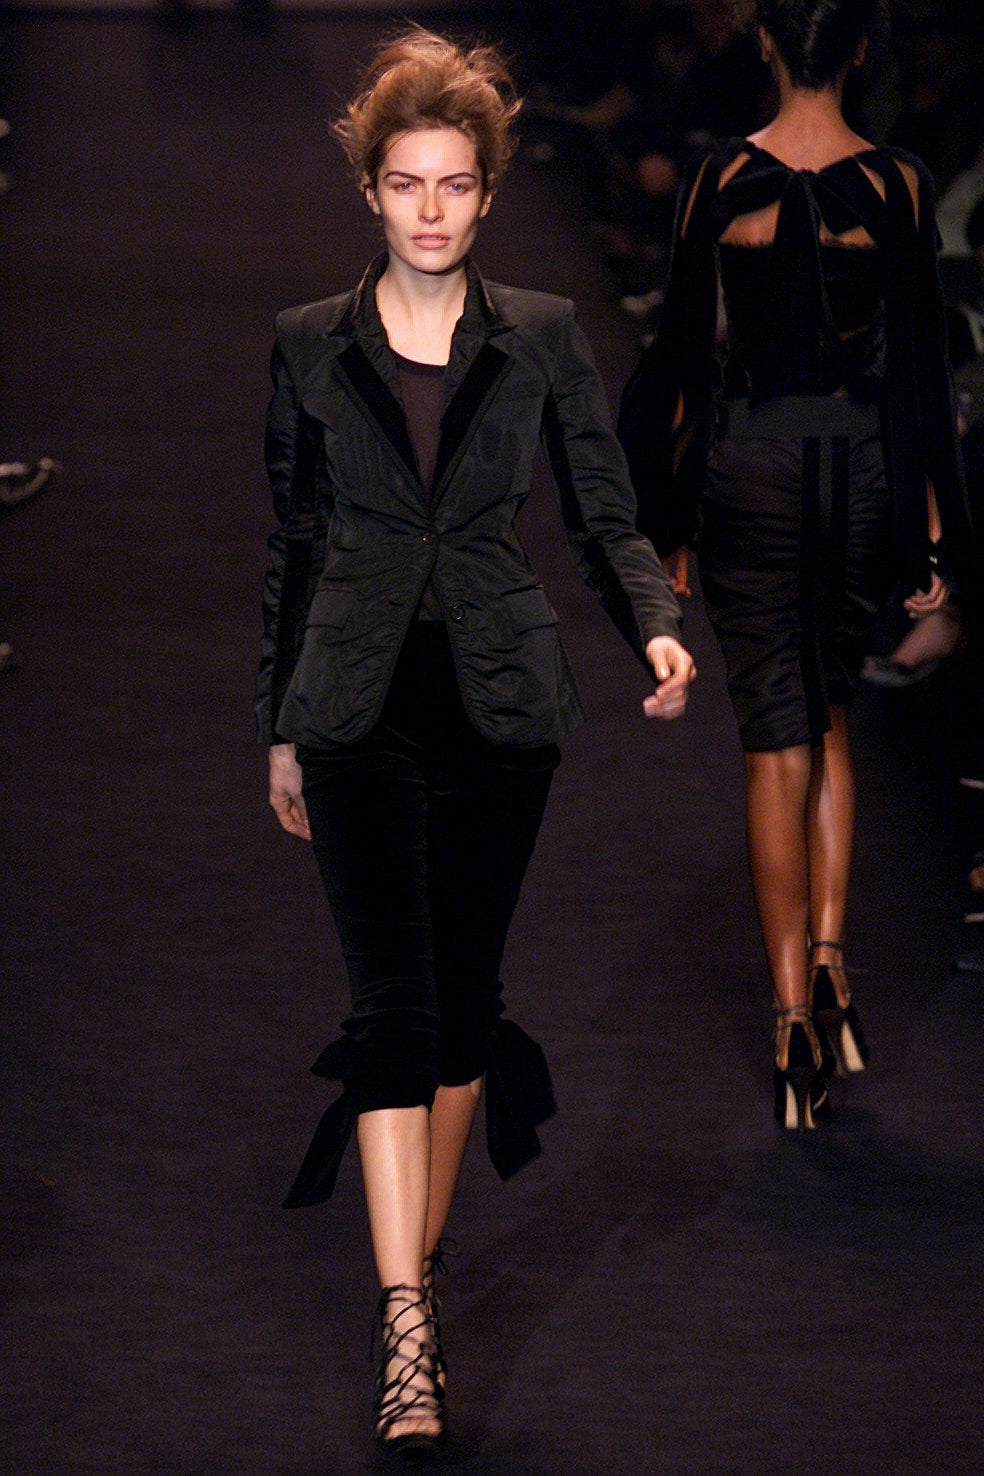 Silk velvet jacket by Yves Saint Laurent on model on runway from Vogue archives @recessla